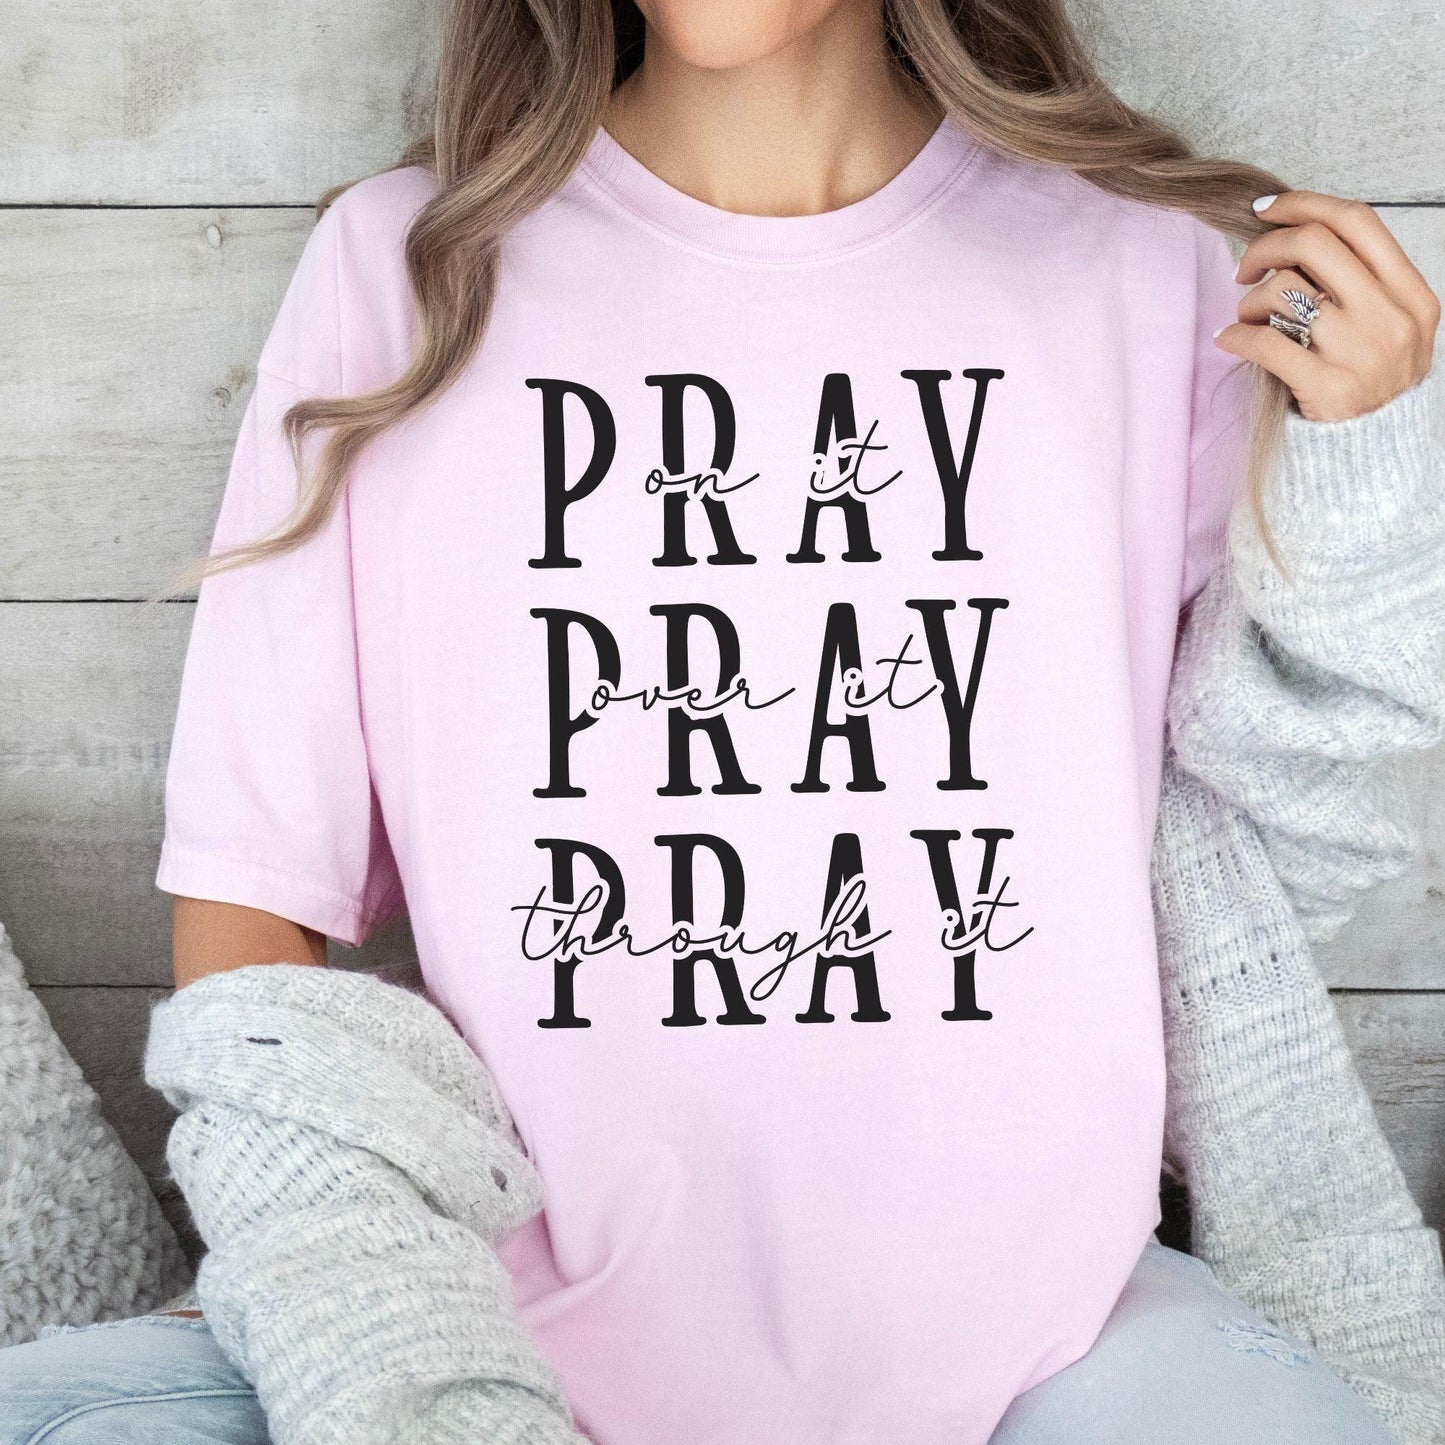 Pray On It Pray Over It Shirt - Jesus Shirt - GiftHaus